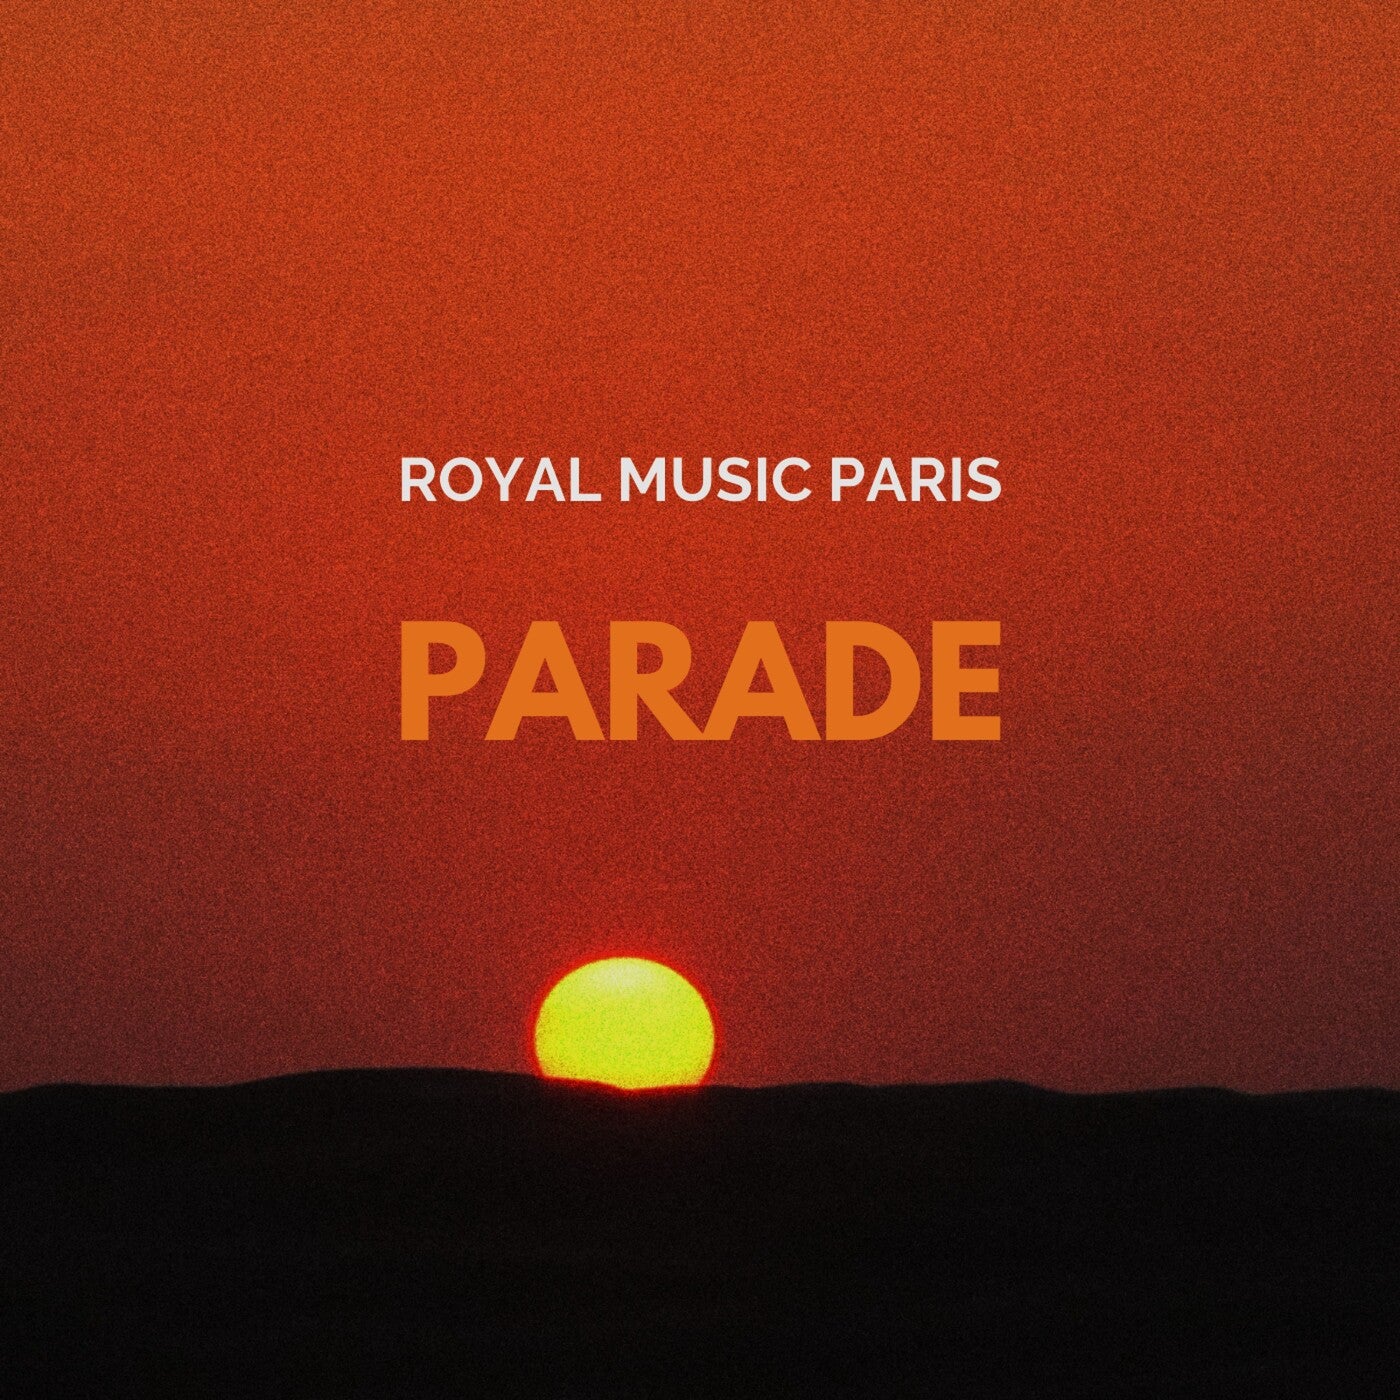 Royal Music Paris Parade [Royal Music Paris]